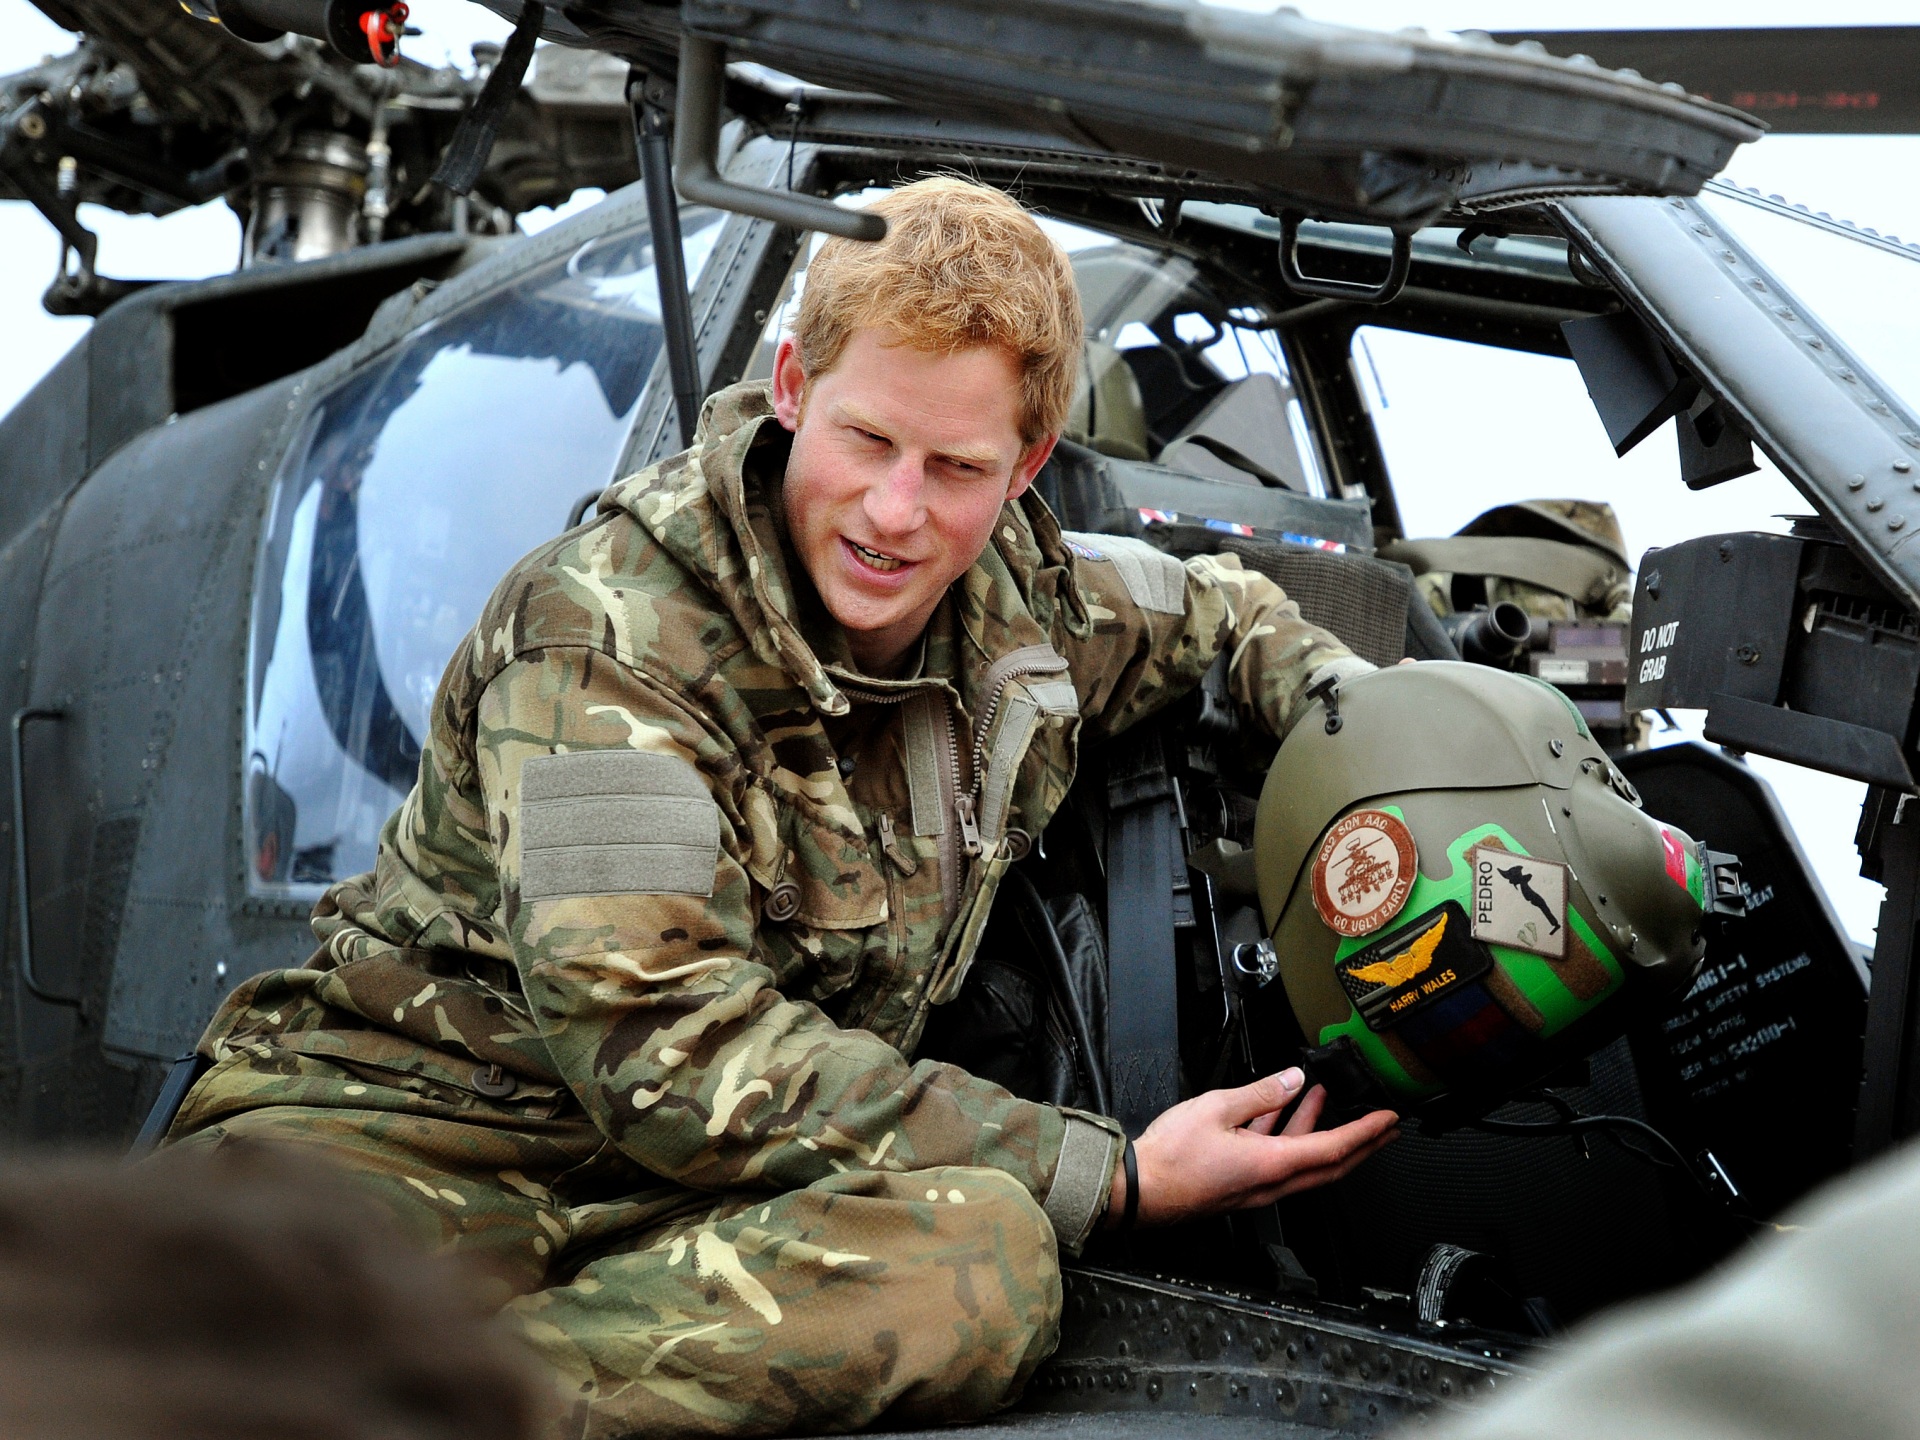 Prince Harry reveals he killed 25 in Afghanistan: British media